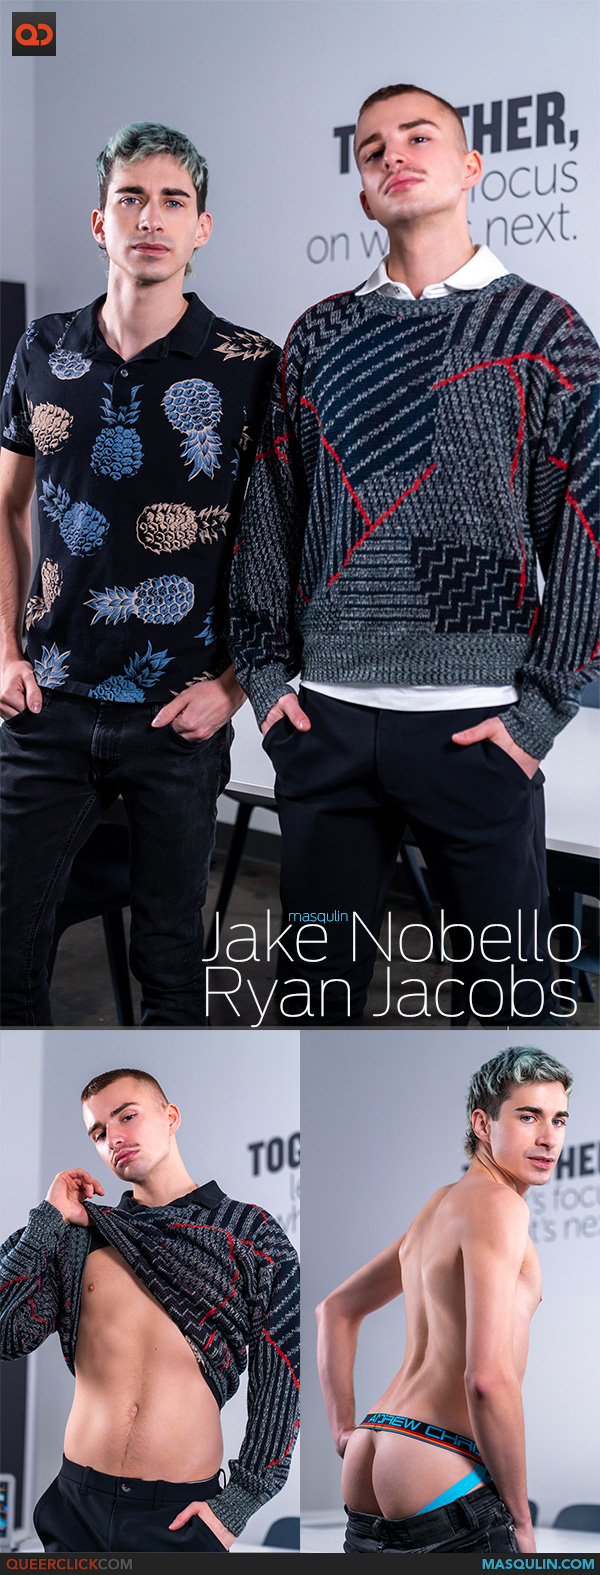 The Bro Network | Masqulin: Jake Nobello and Ryan Jacobs - Conference Exposure - CYBER WEEK SAVINGS!